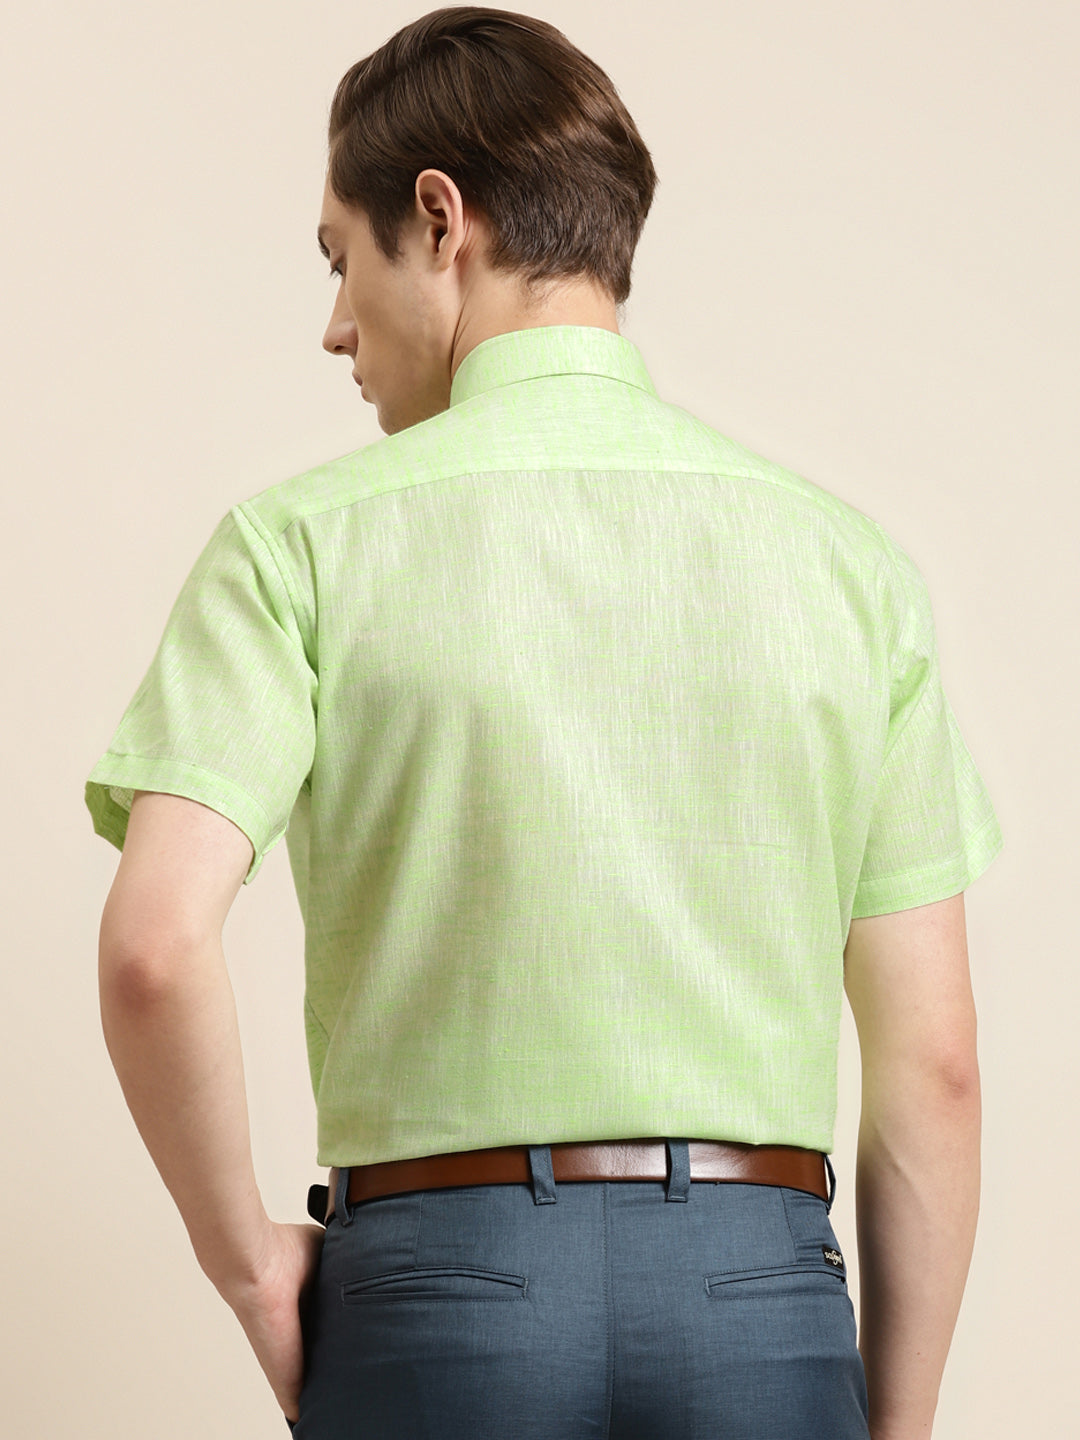 Men's Cotton Blend Lime Green Classic Formal Shirt - Sojanya